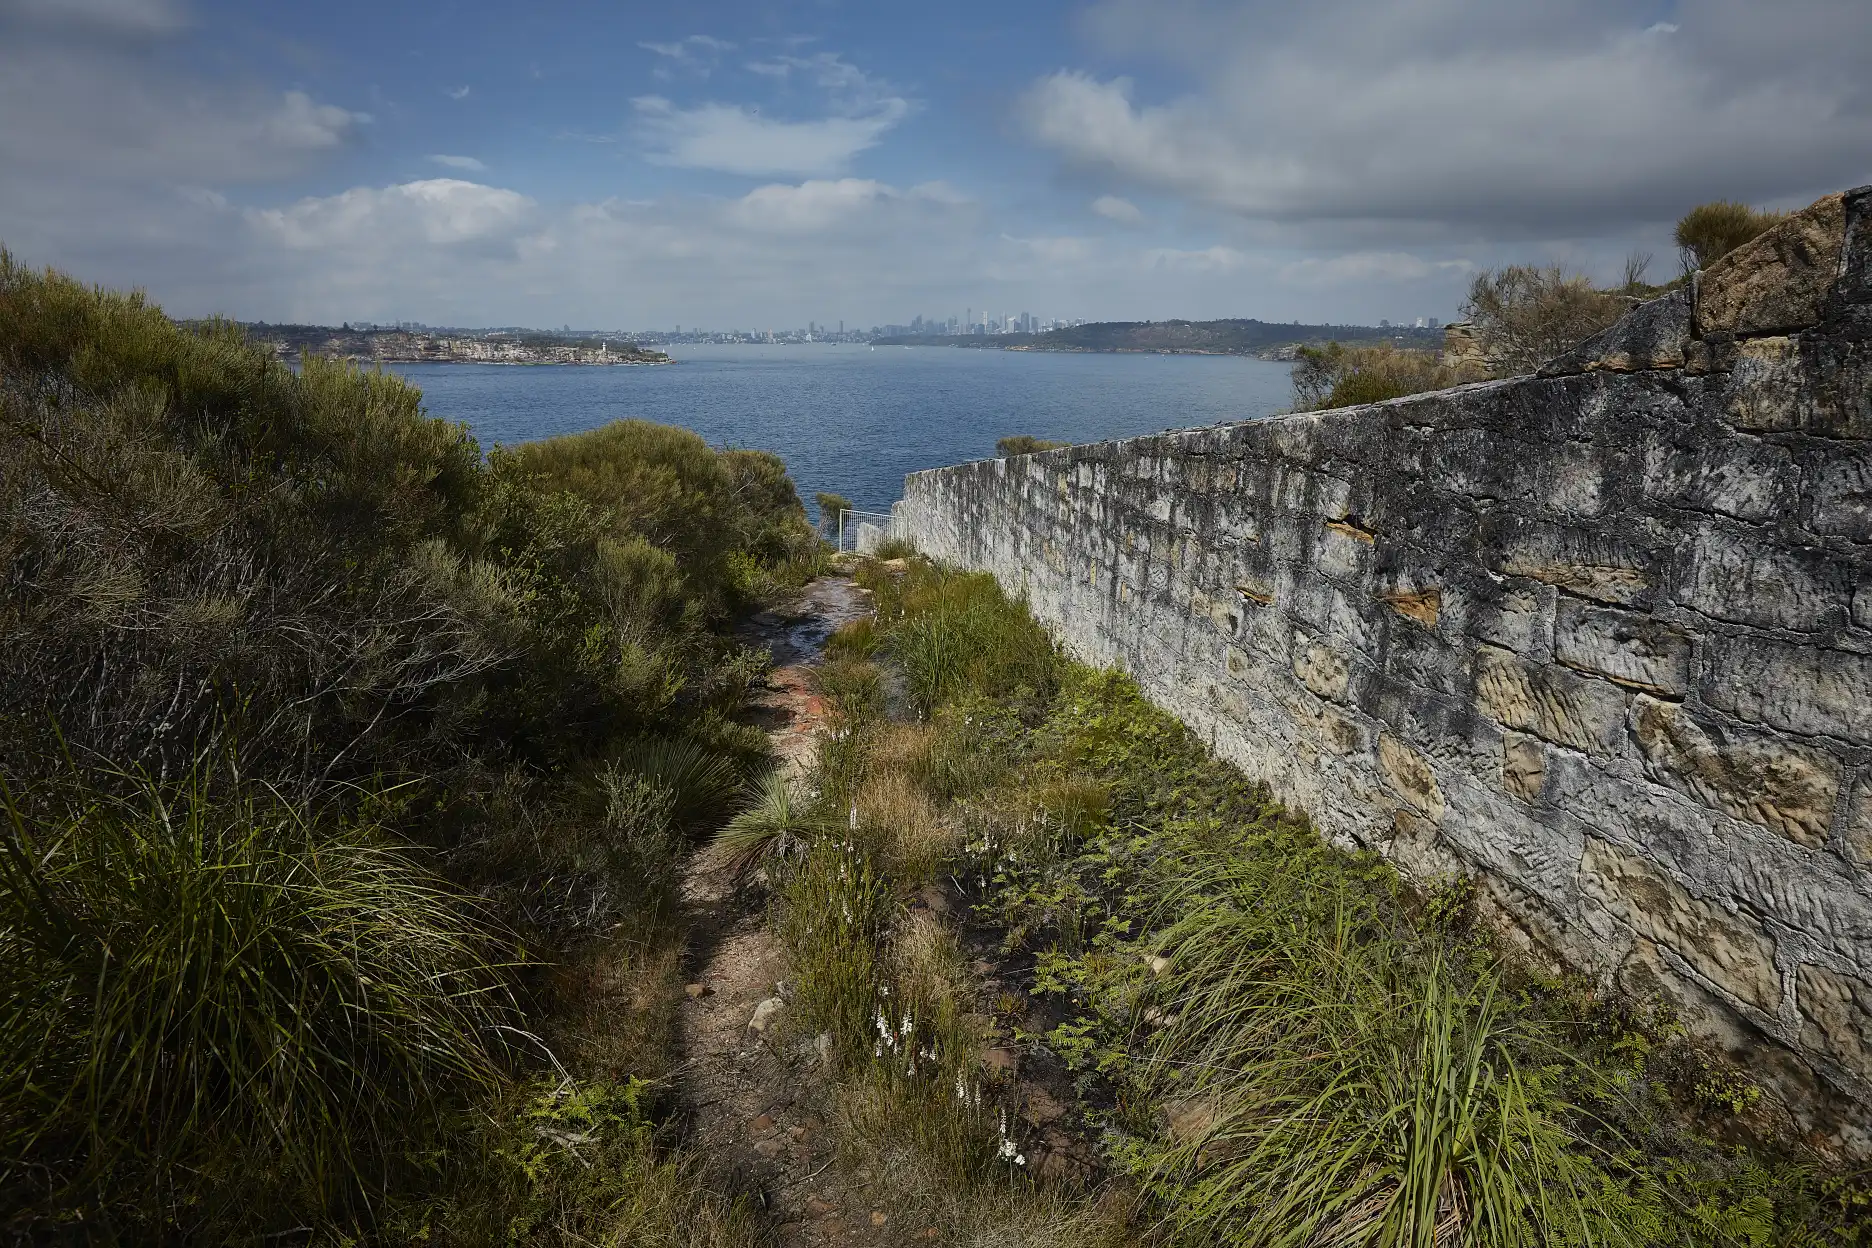 Seep at North Head, viewed looking towards Sydney Harbor